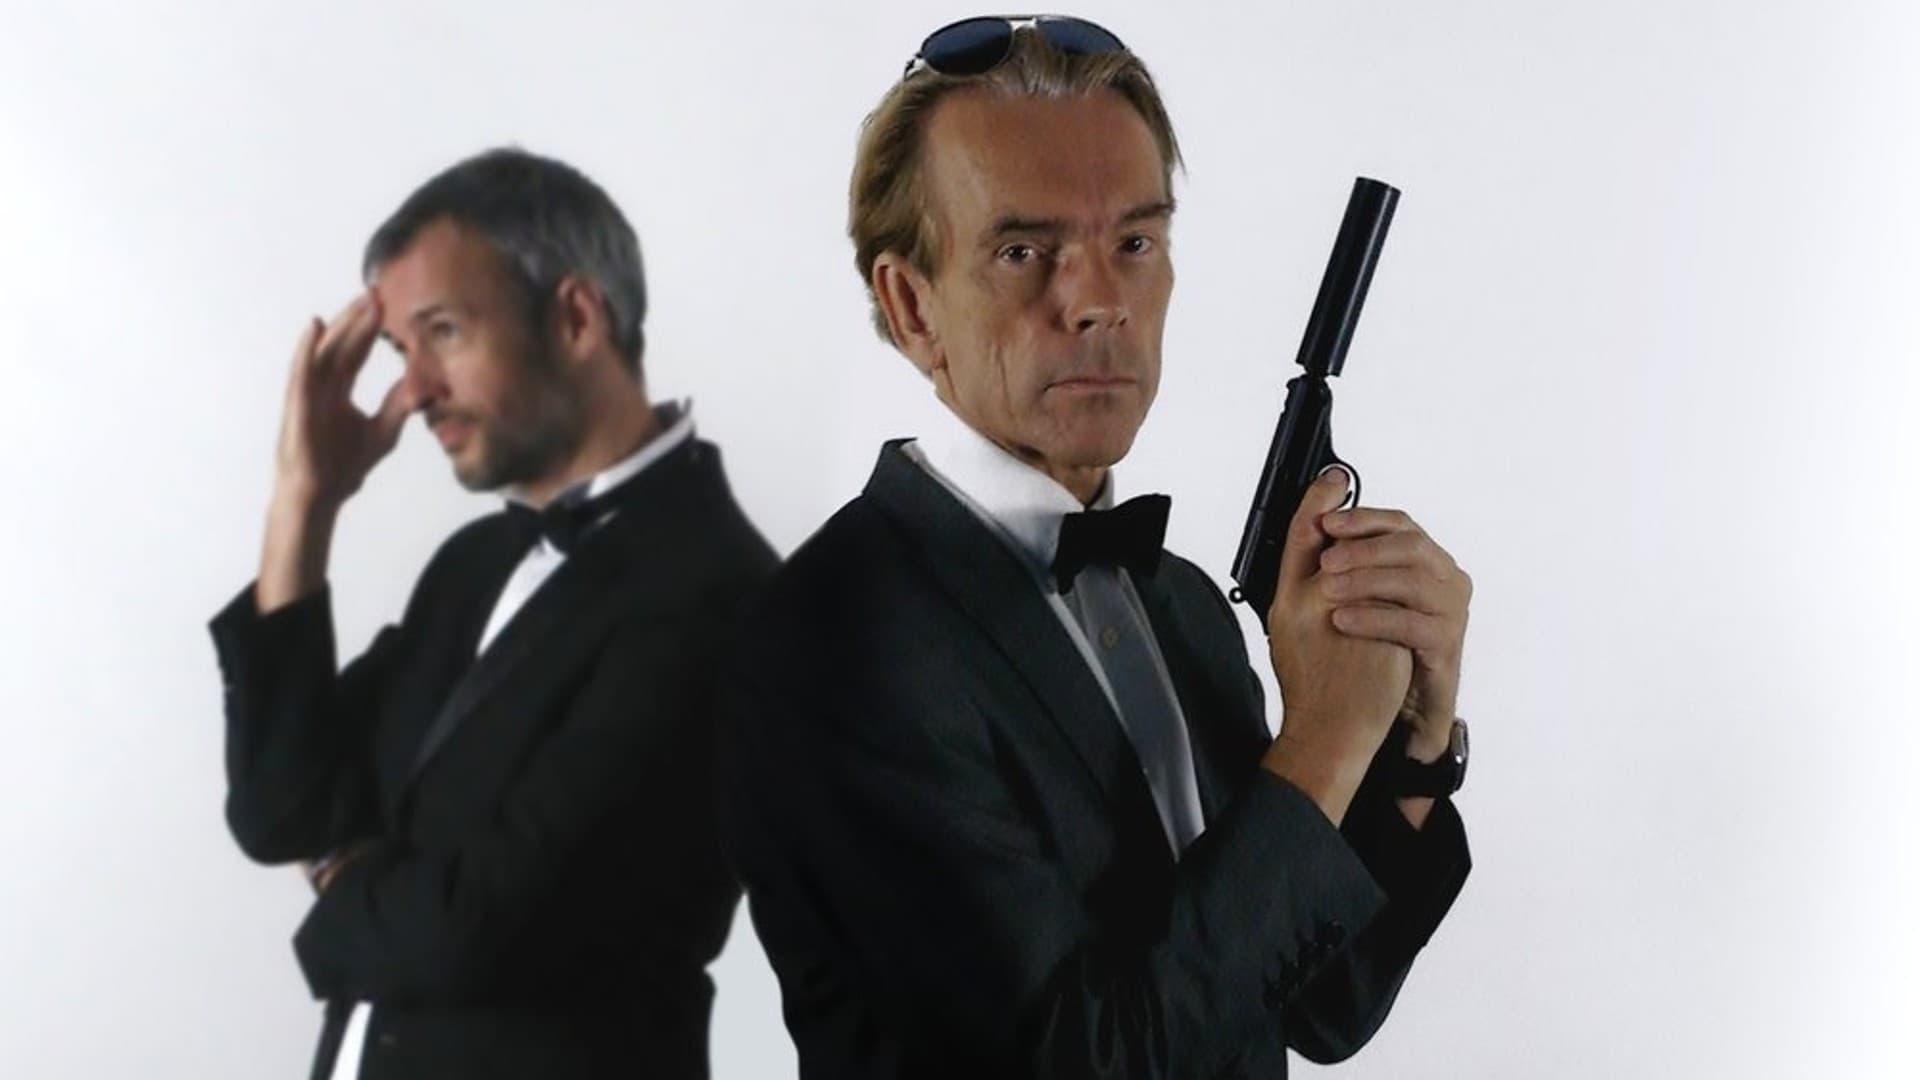 James Bond backdrop